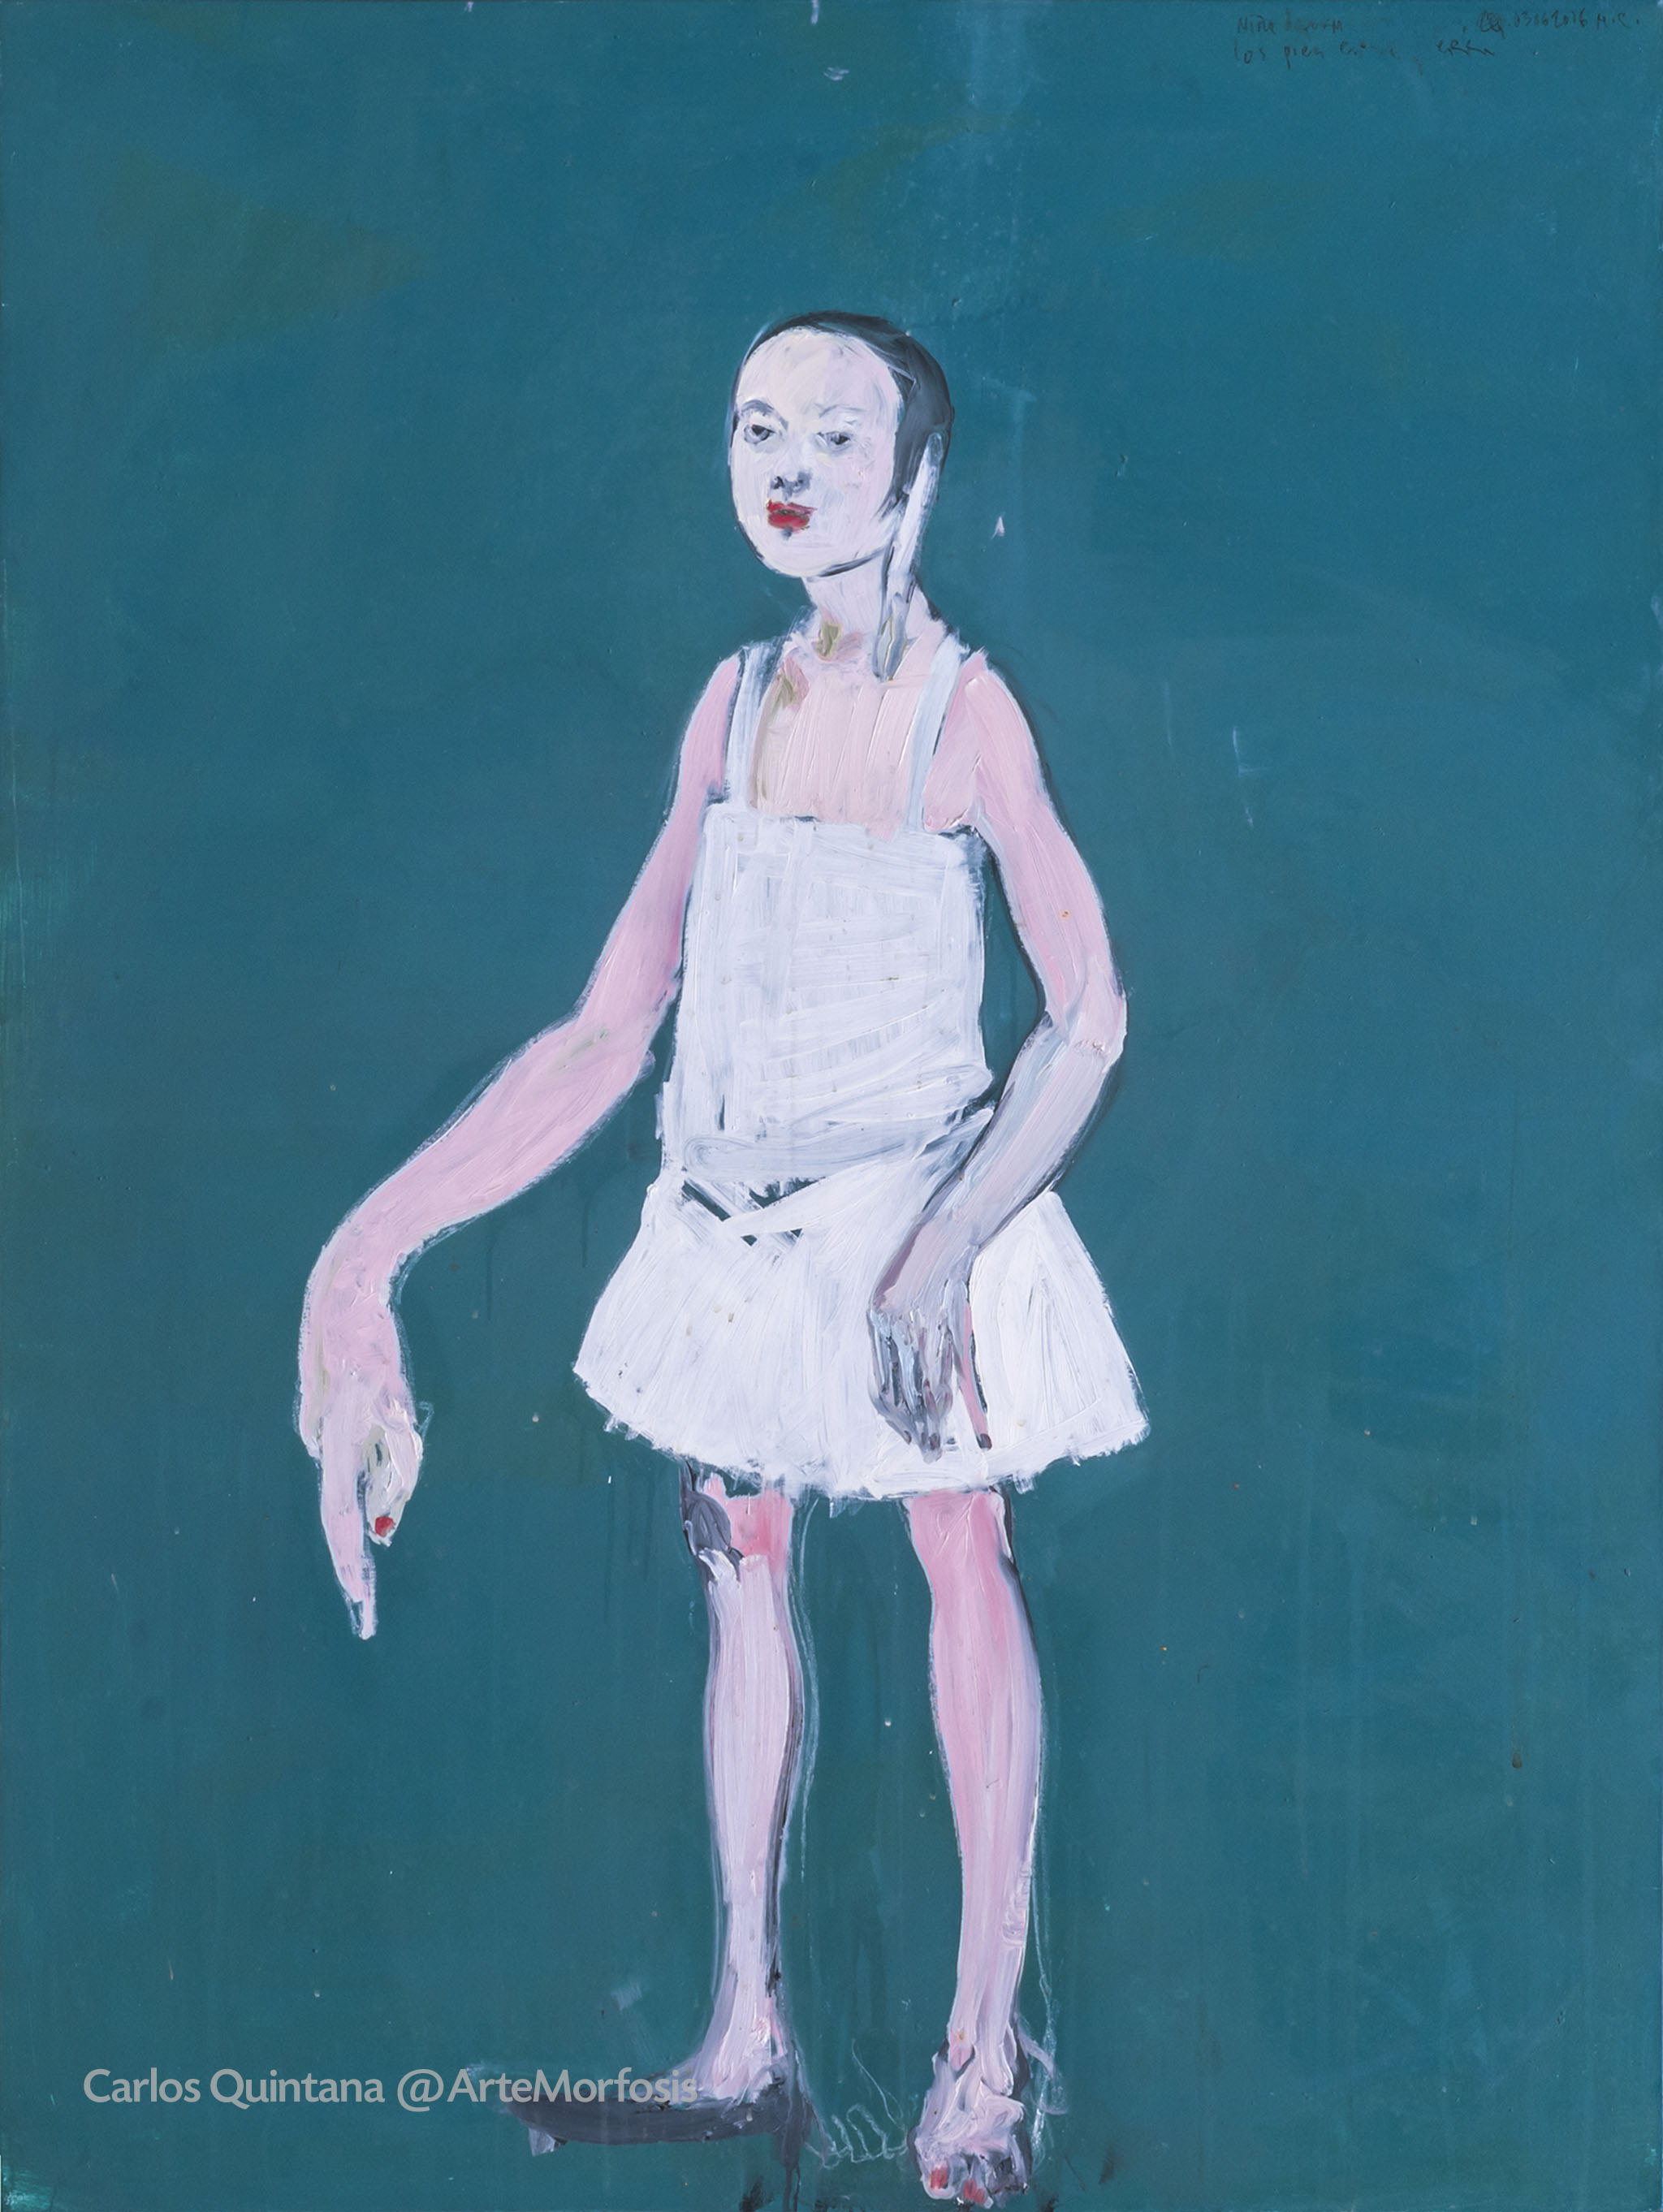 Unförmiges Mädchen mit den Füssen auf dem Boden | Niña deforme con los pies en la tierra 2016, Öl auf Leinwand | Óleo sobre tela 160 x 120 cm